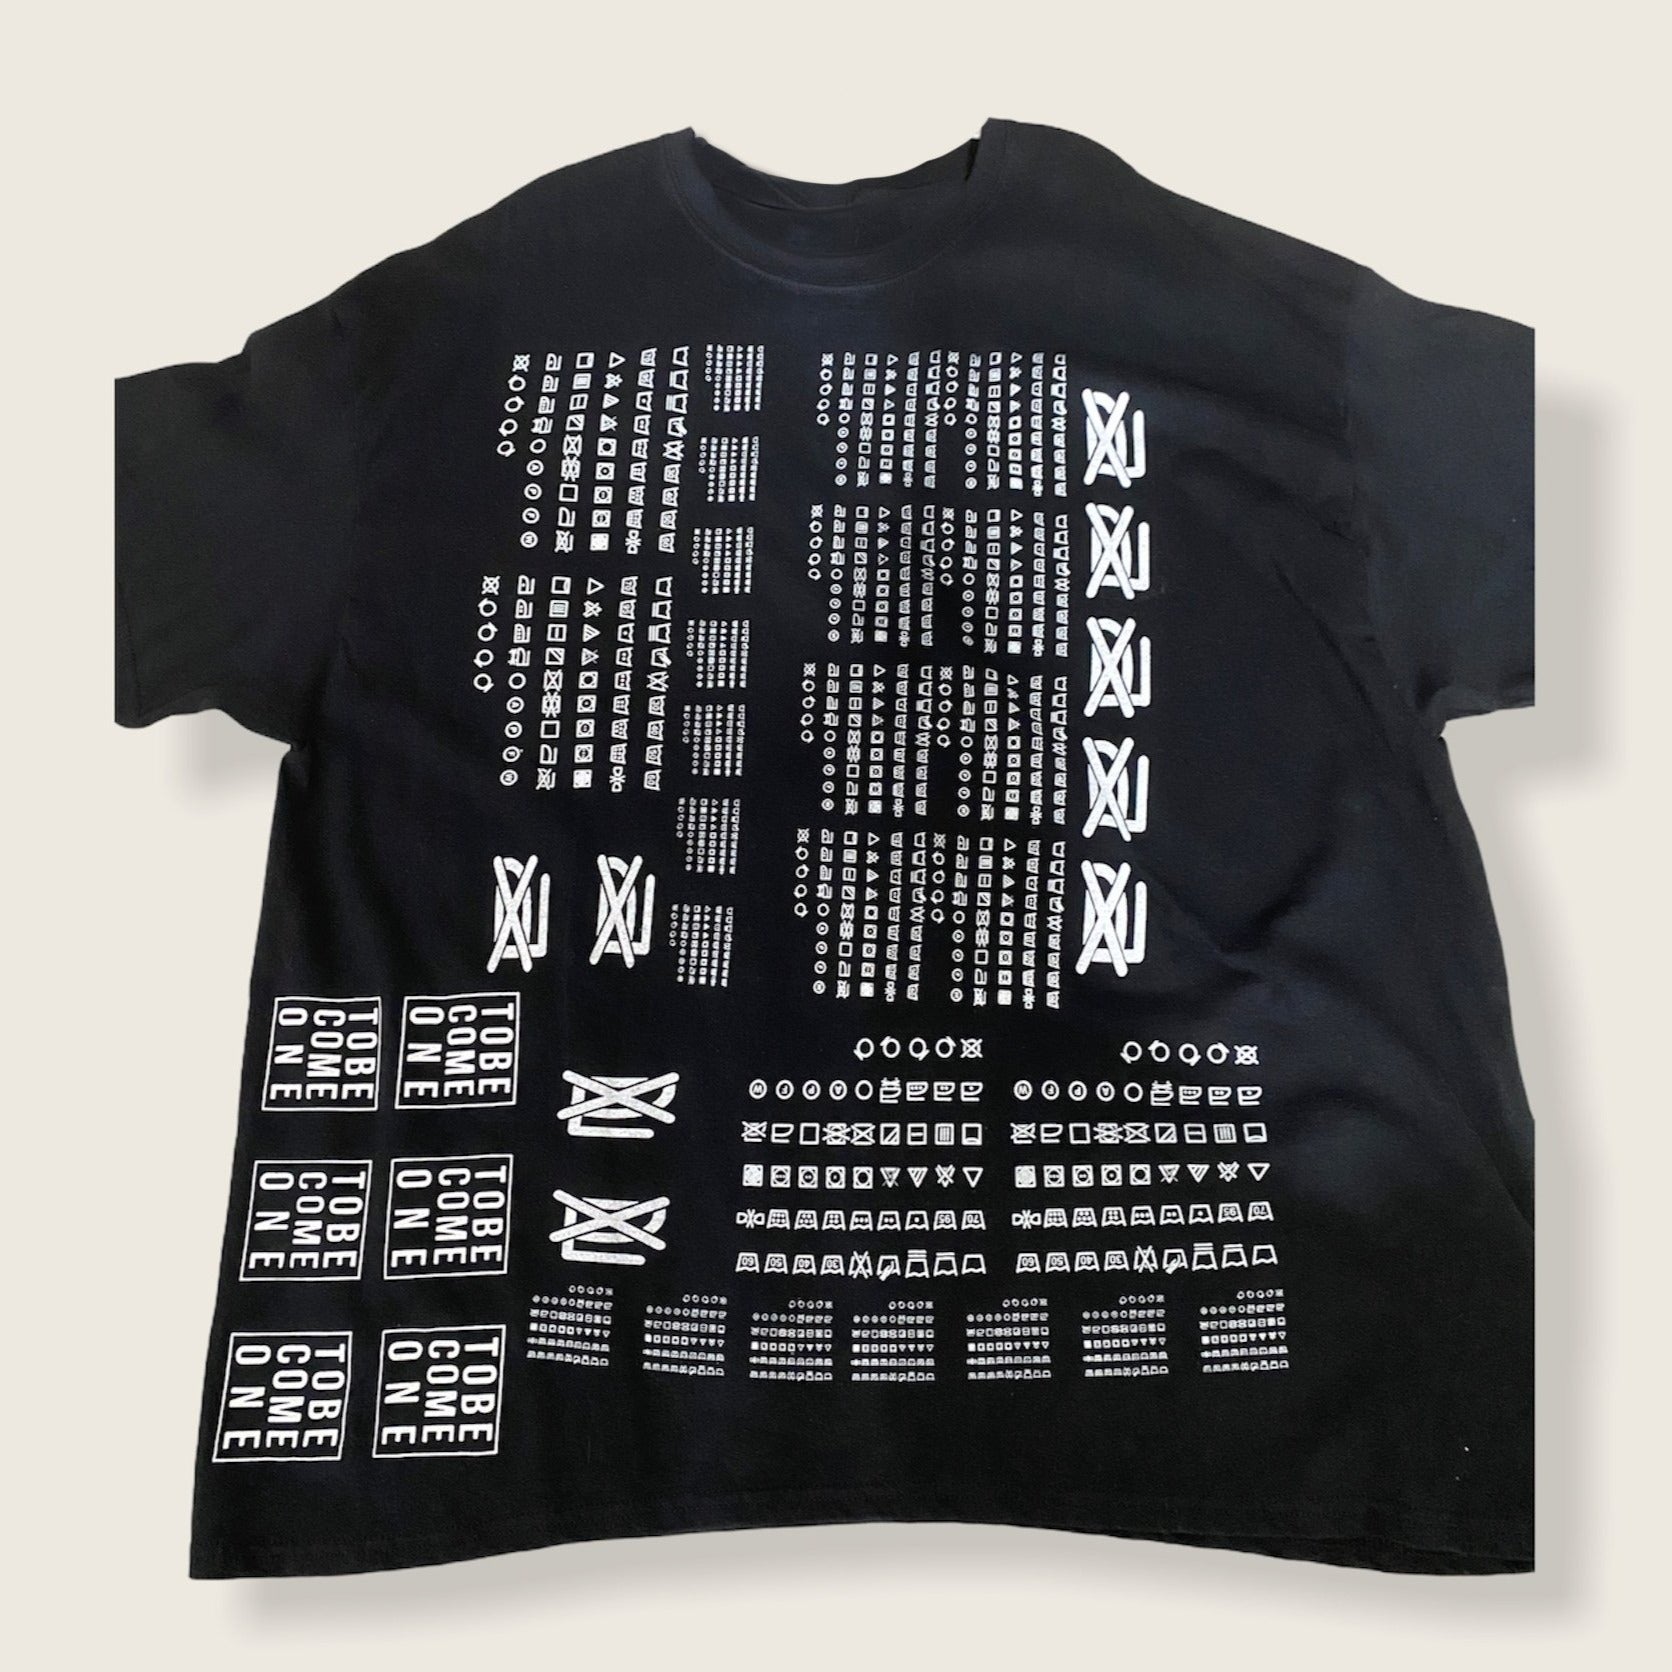 Short Sleeve Printed T-shirt- Black